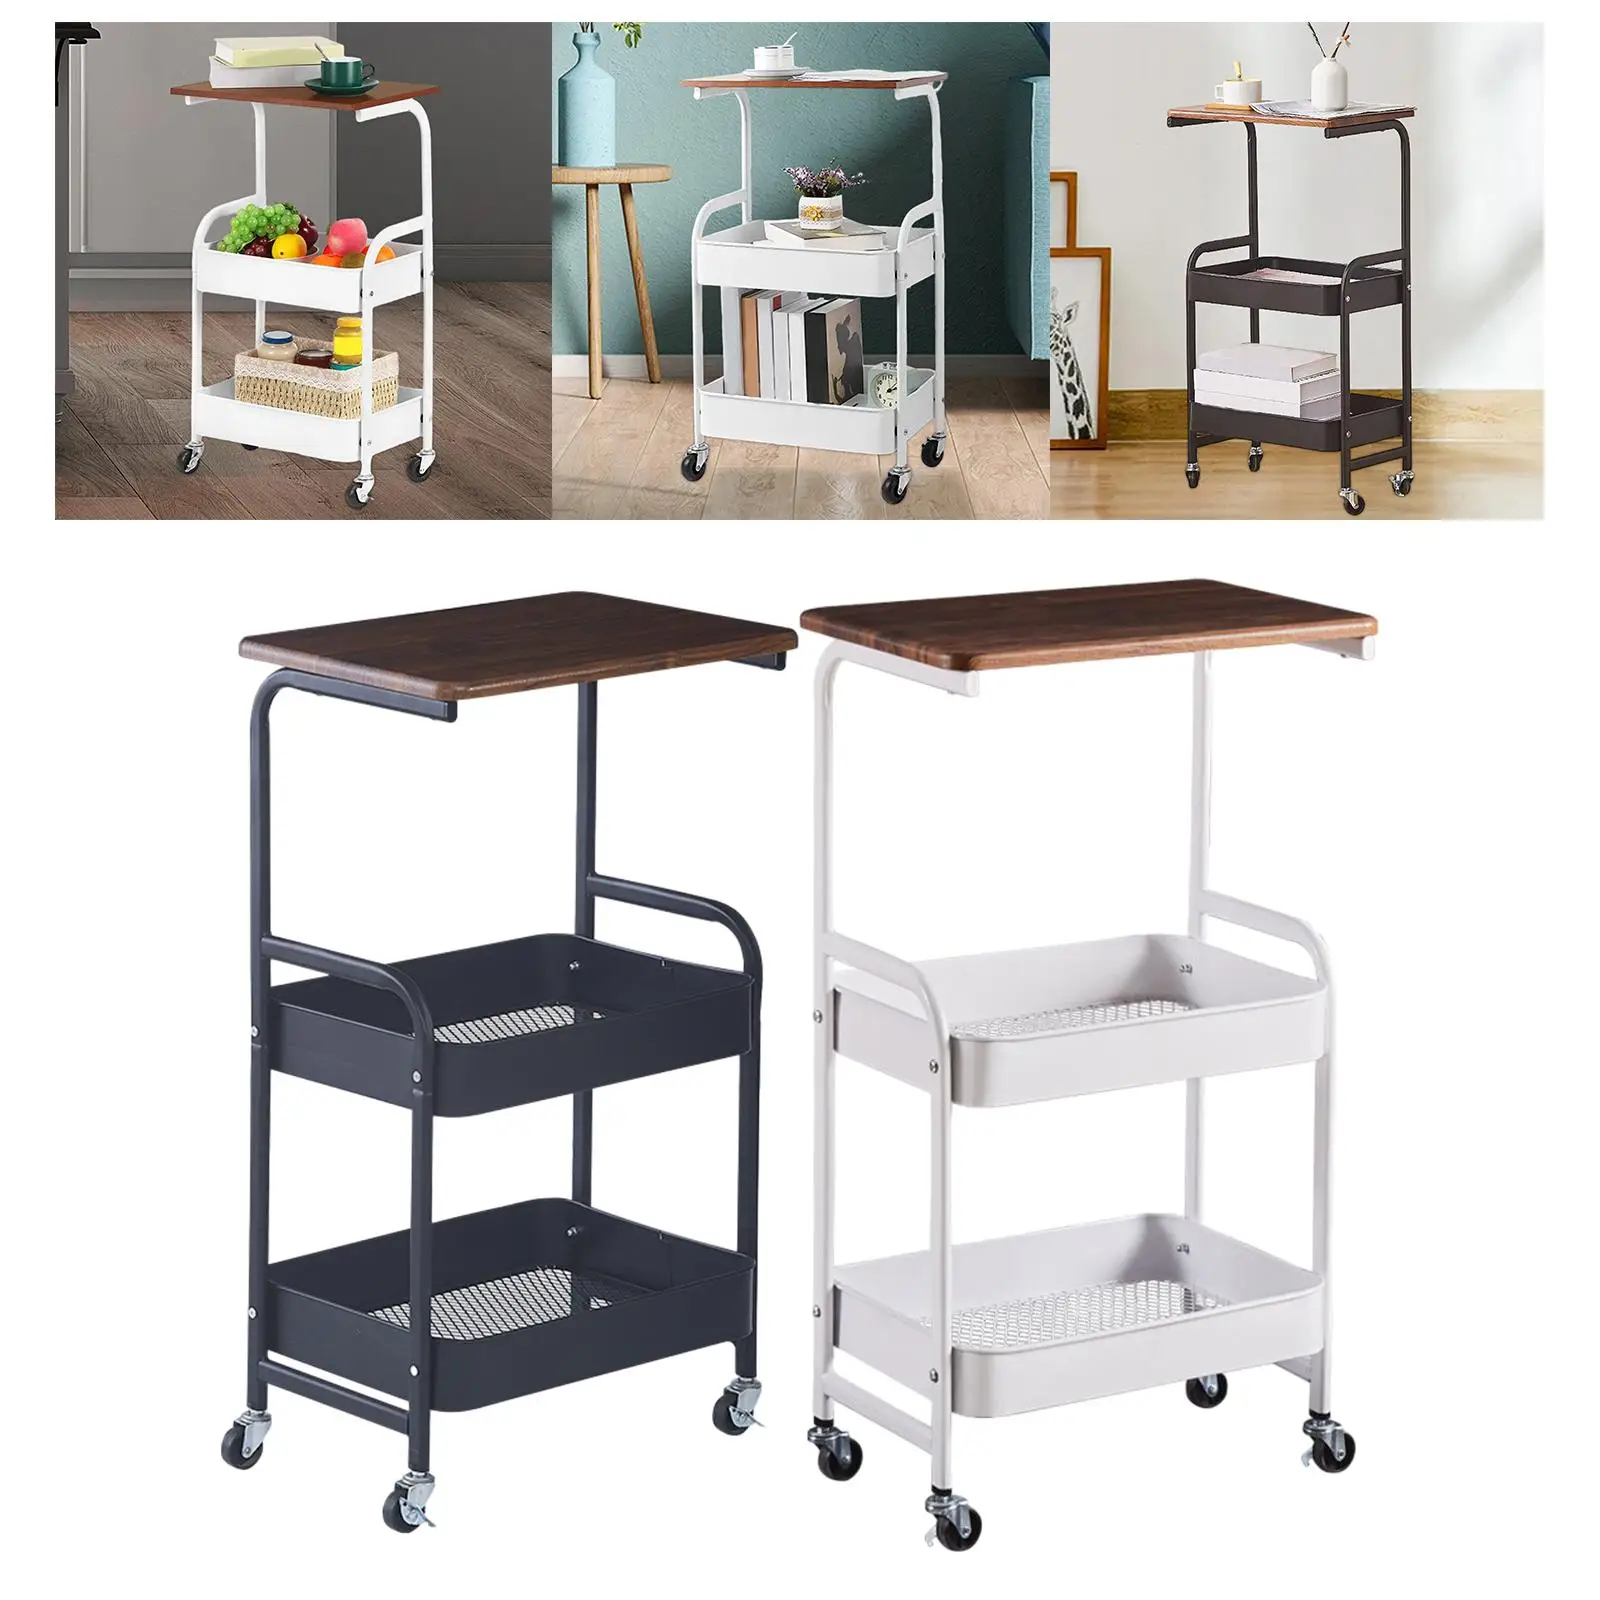 3 Tier Slim Storage Cart with Wheels Metal Frame Rustproof Rolling Utility Cart for Laundry Room Bathroom Kitchen Bedroom Office